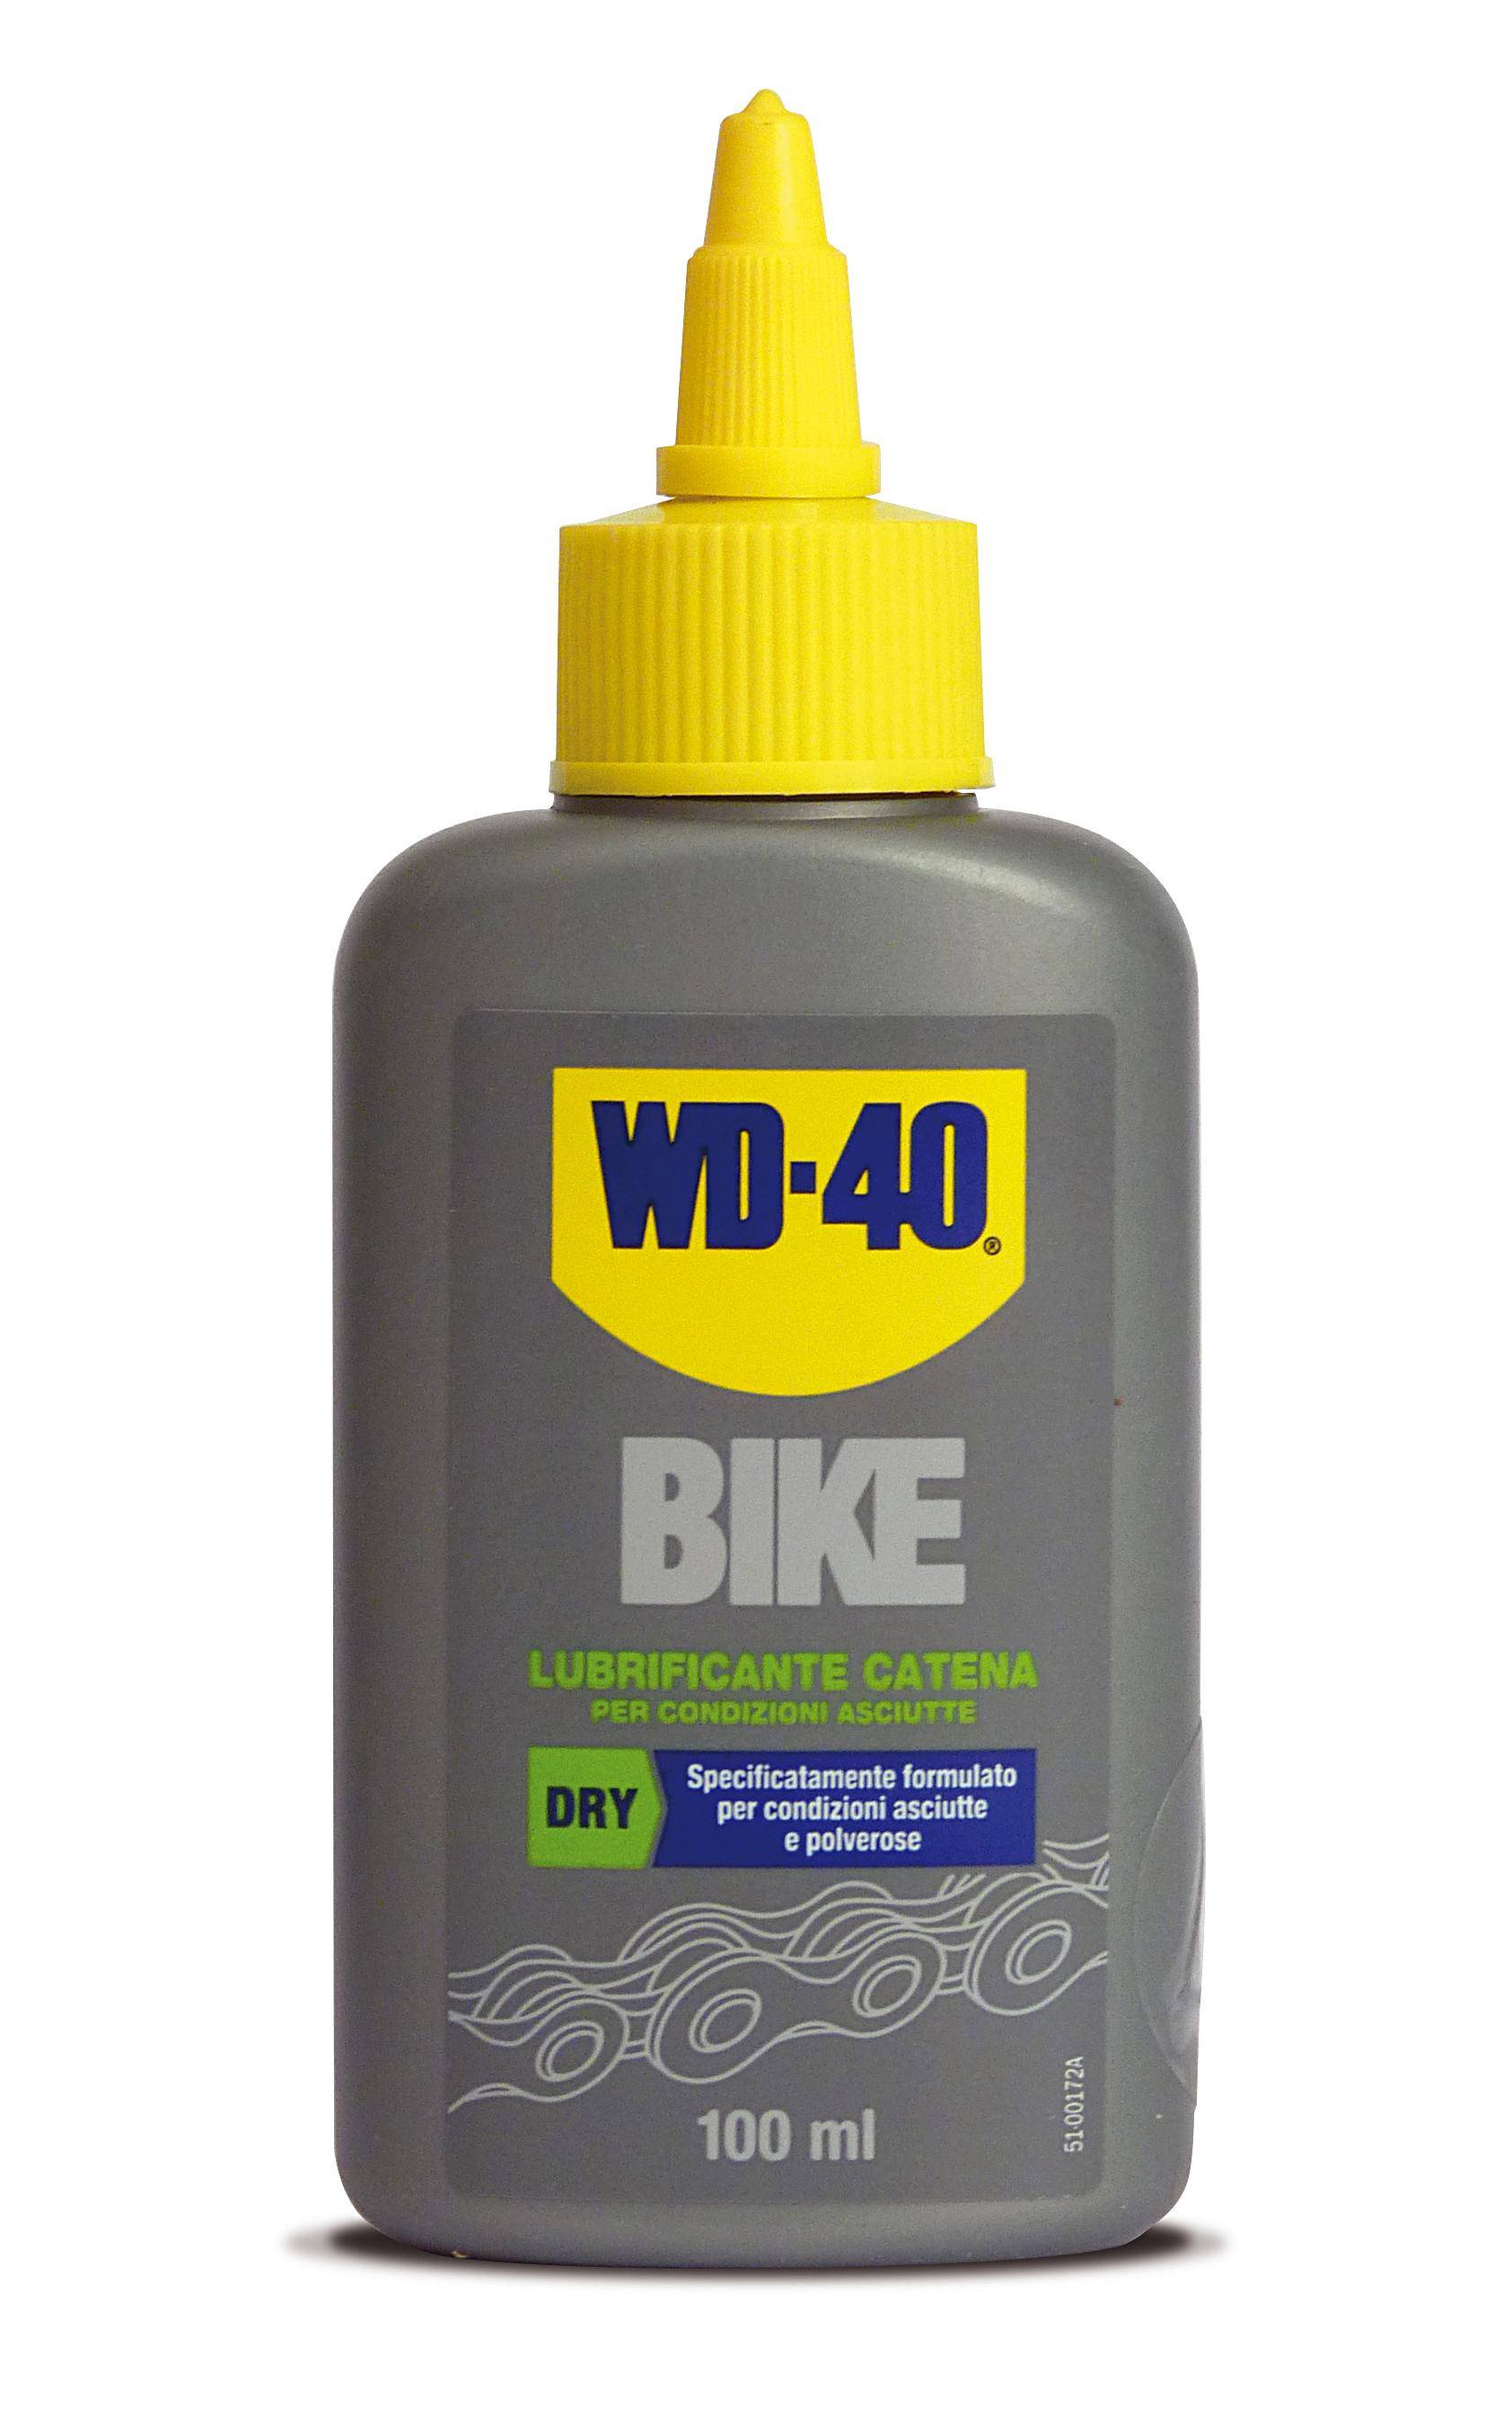 Lubrificante  catena WD-40 Bike – 100 ml – condizioni asciutte